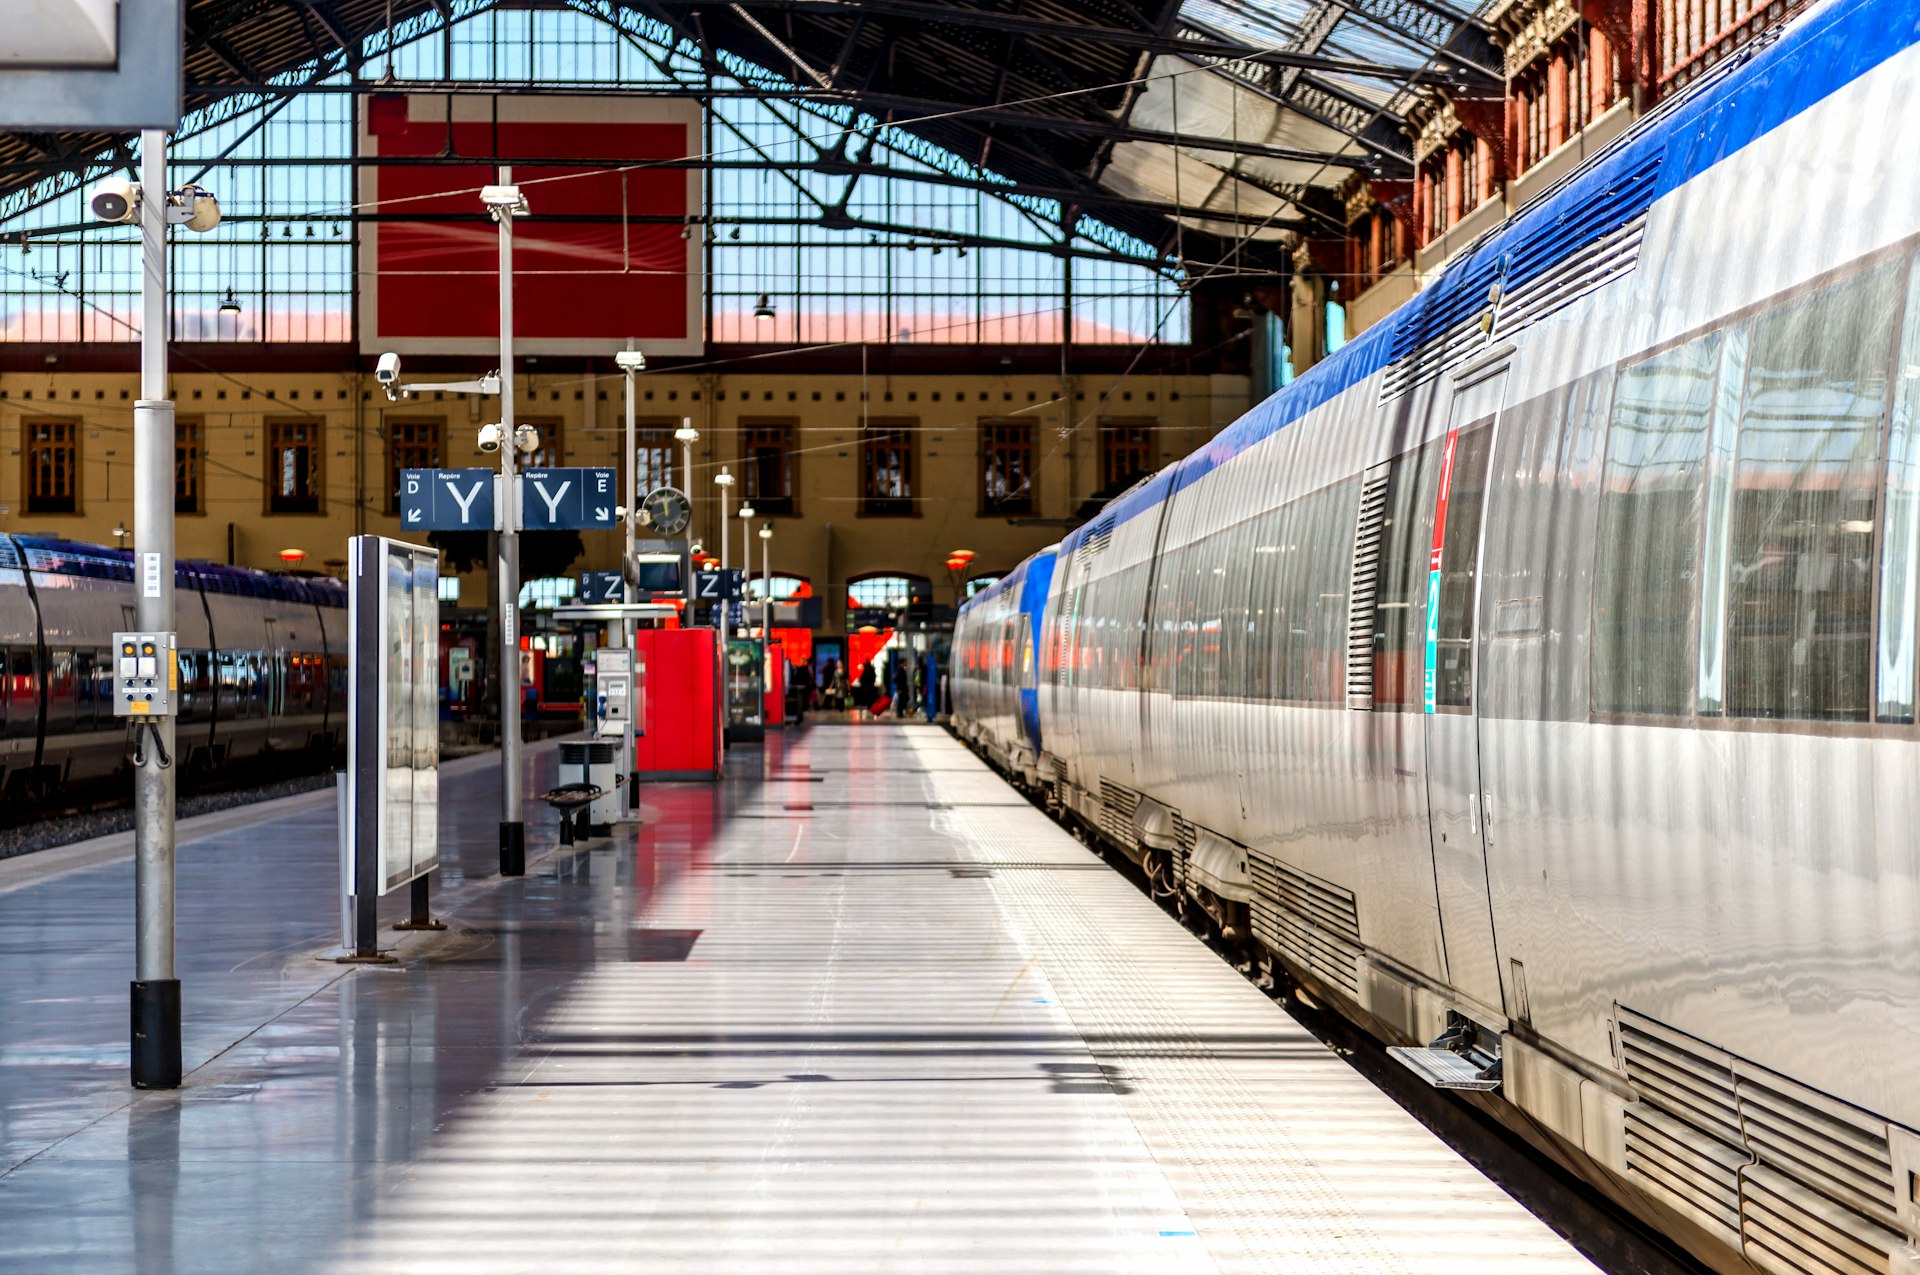 A TGV by a platform at St-Charles railway station, Marseille, Côte d’Azur, France